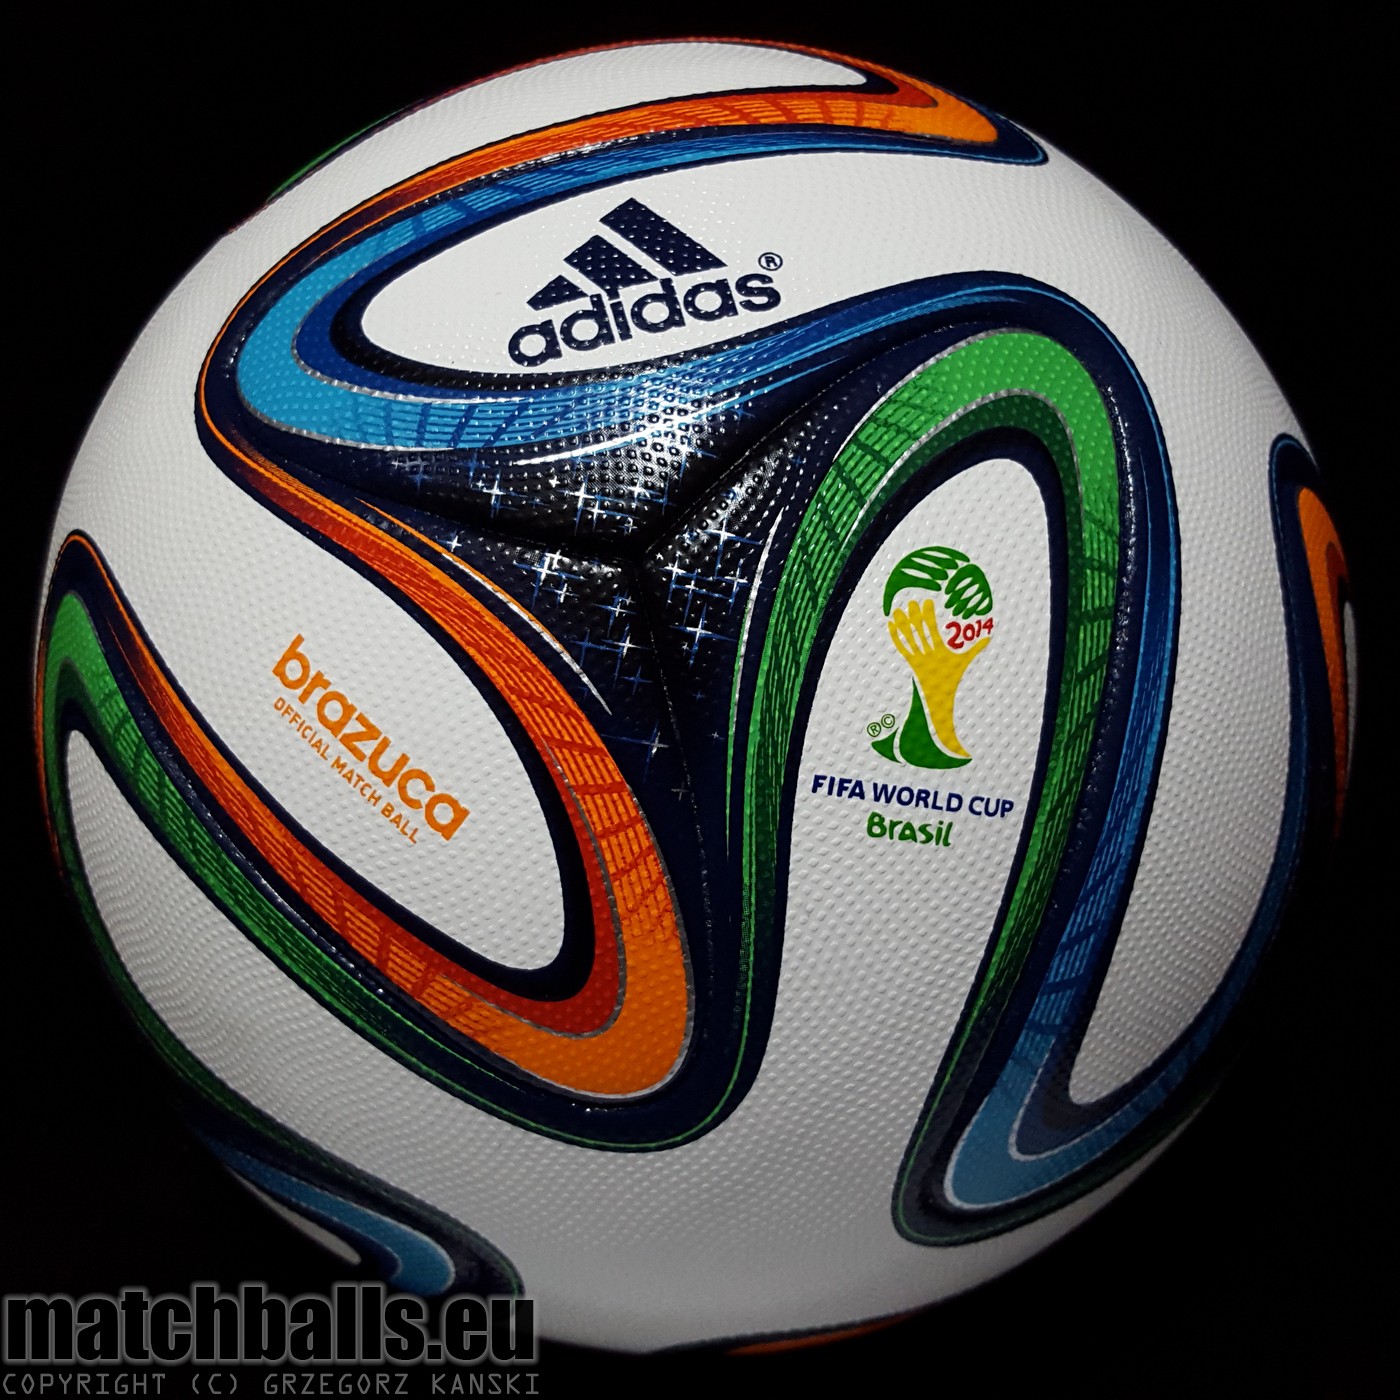 Adidas Brazuca Regular (OMB) | matchballs.eu